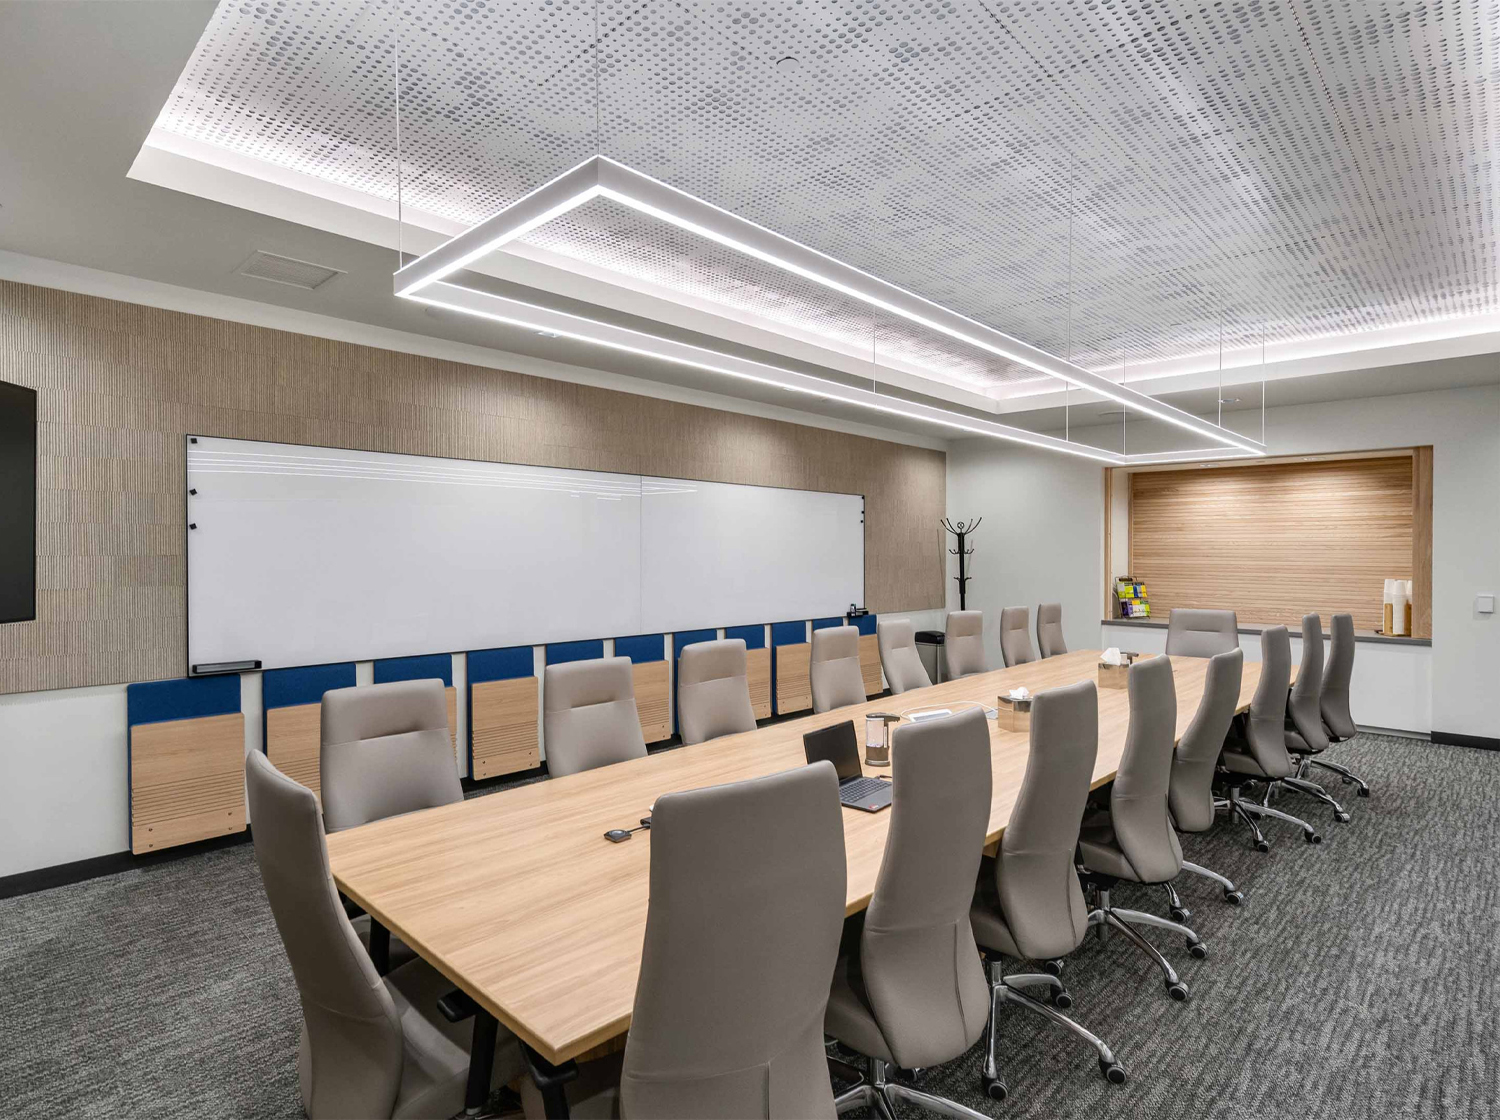 Interior decorative metal ceiling tiles perforated aluminum false panels